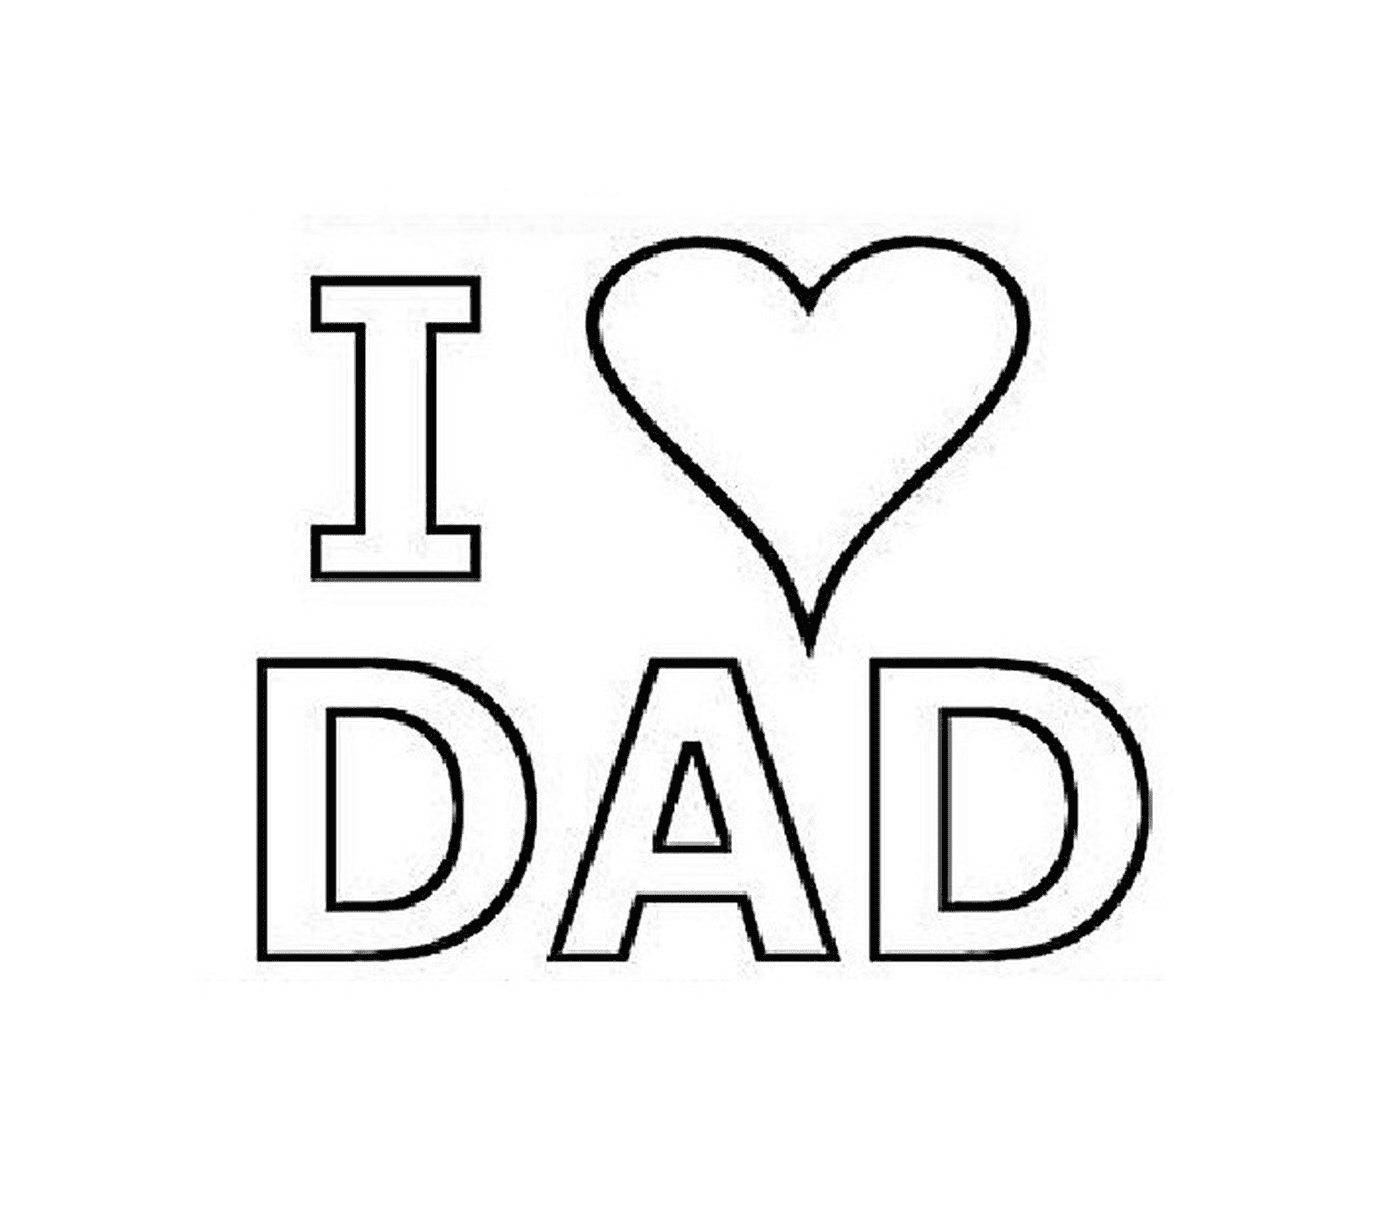   मैं तुम्हें पिता प्यार करता हूँ 